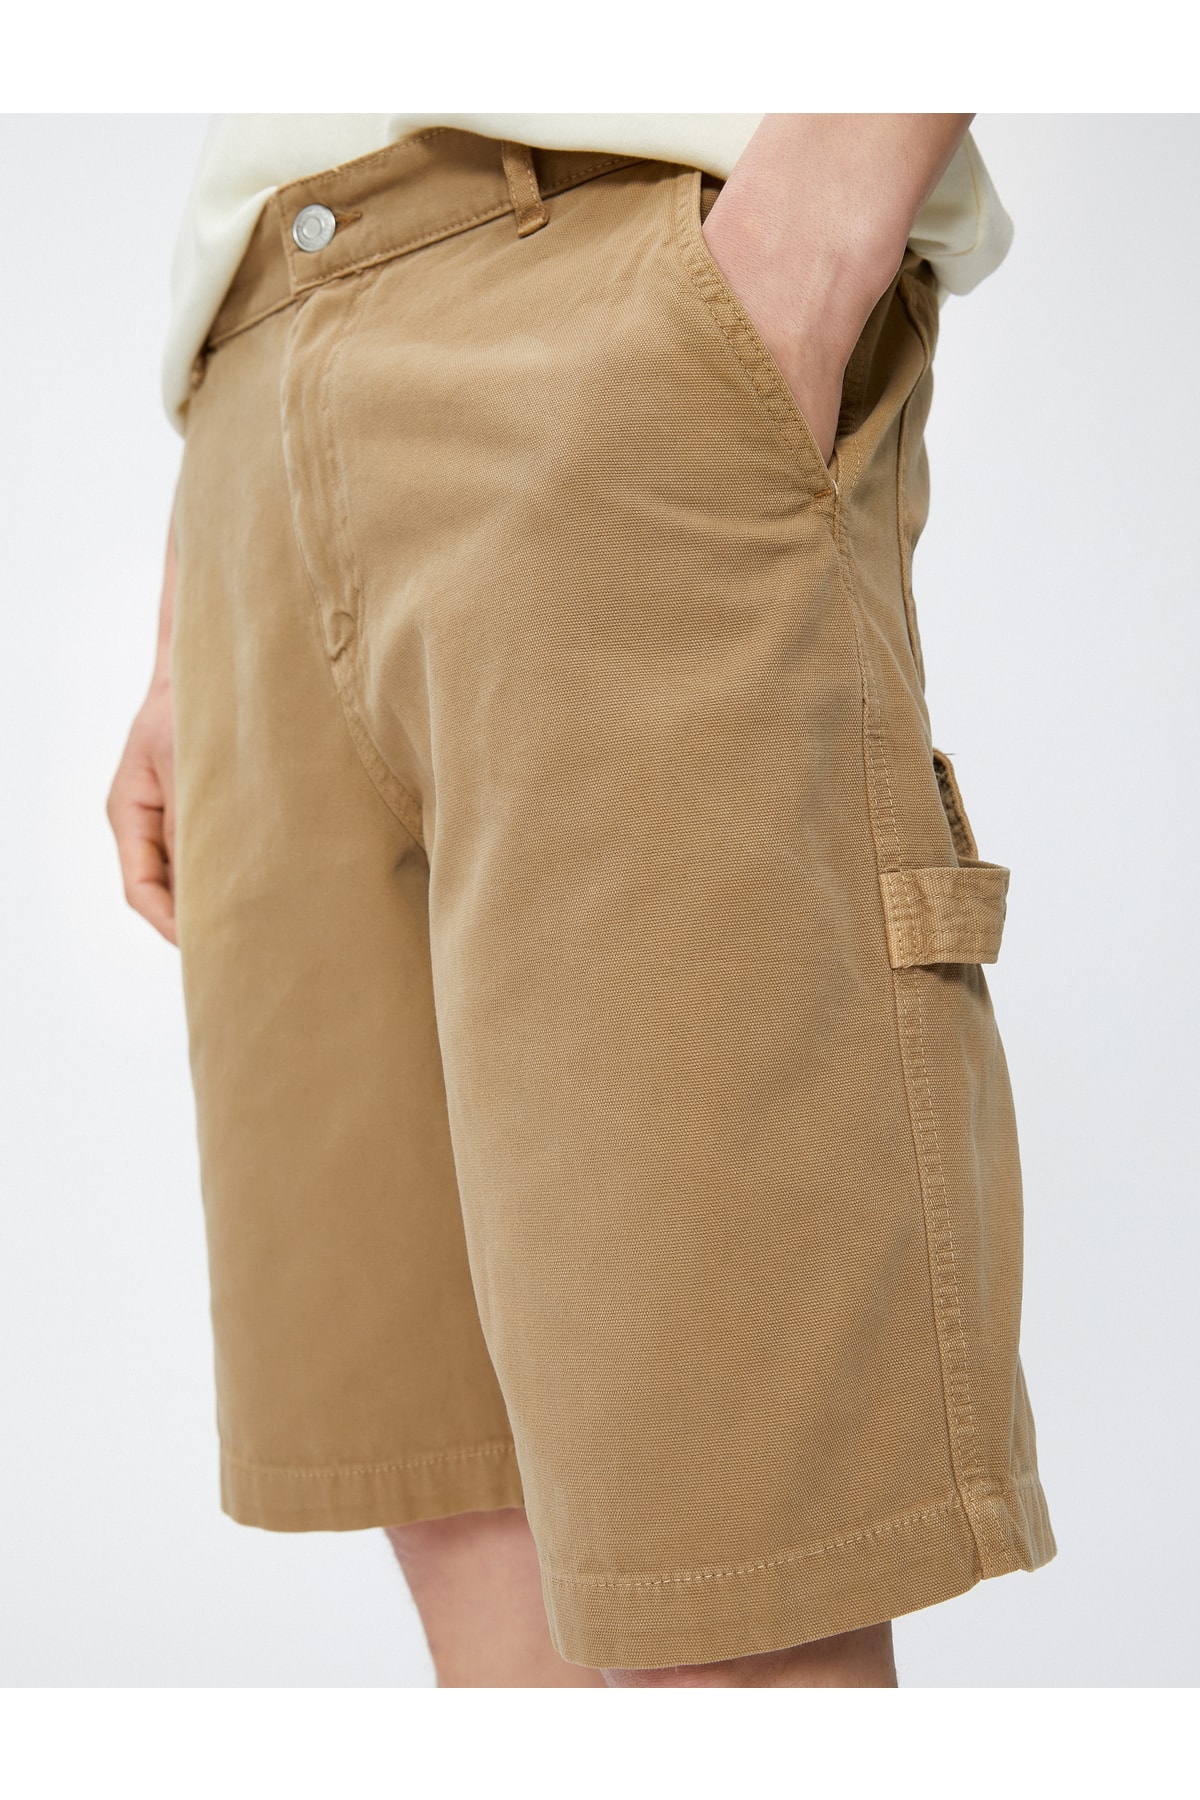 Koton Shorts - Beige - Normal Waist